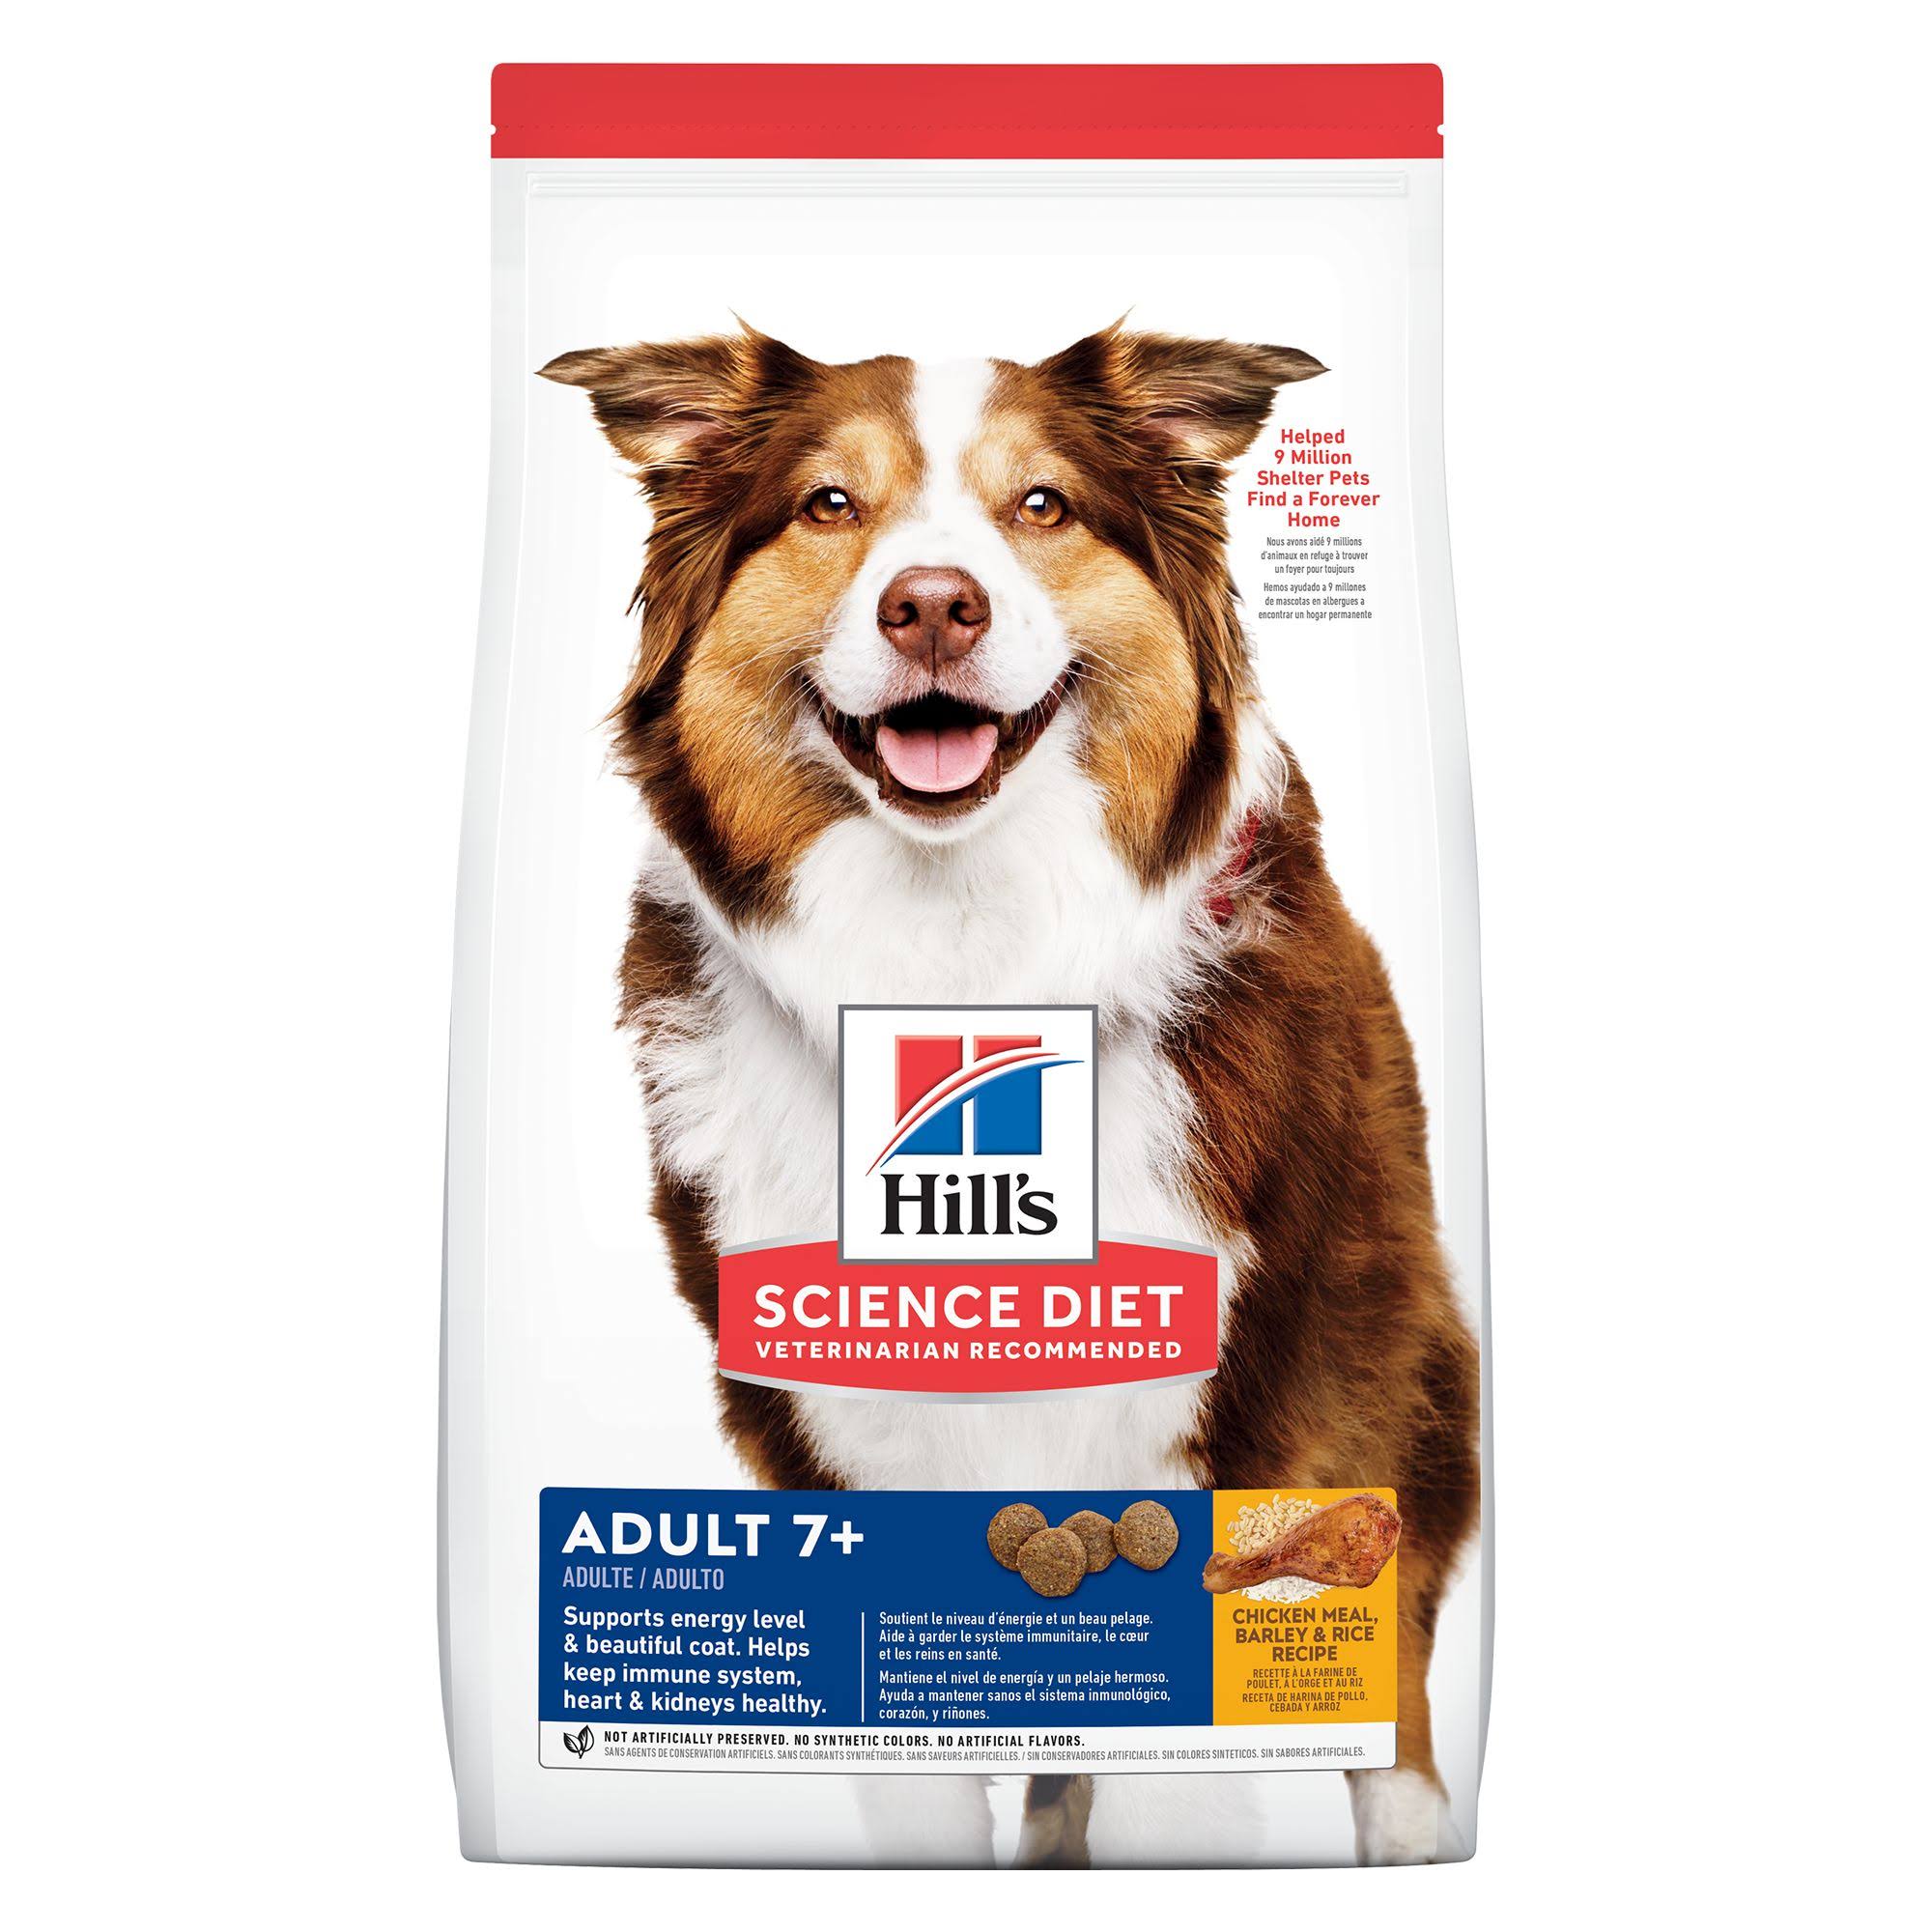 Hills Science Diet Dog Food, Premium, Adult 7+ - 15 lb